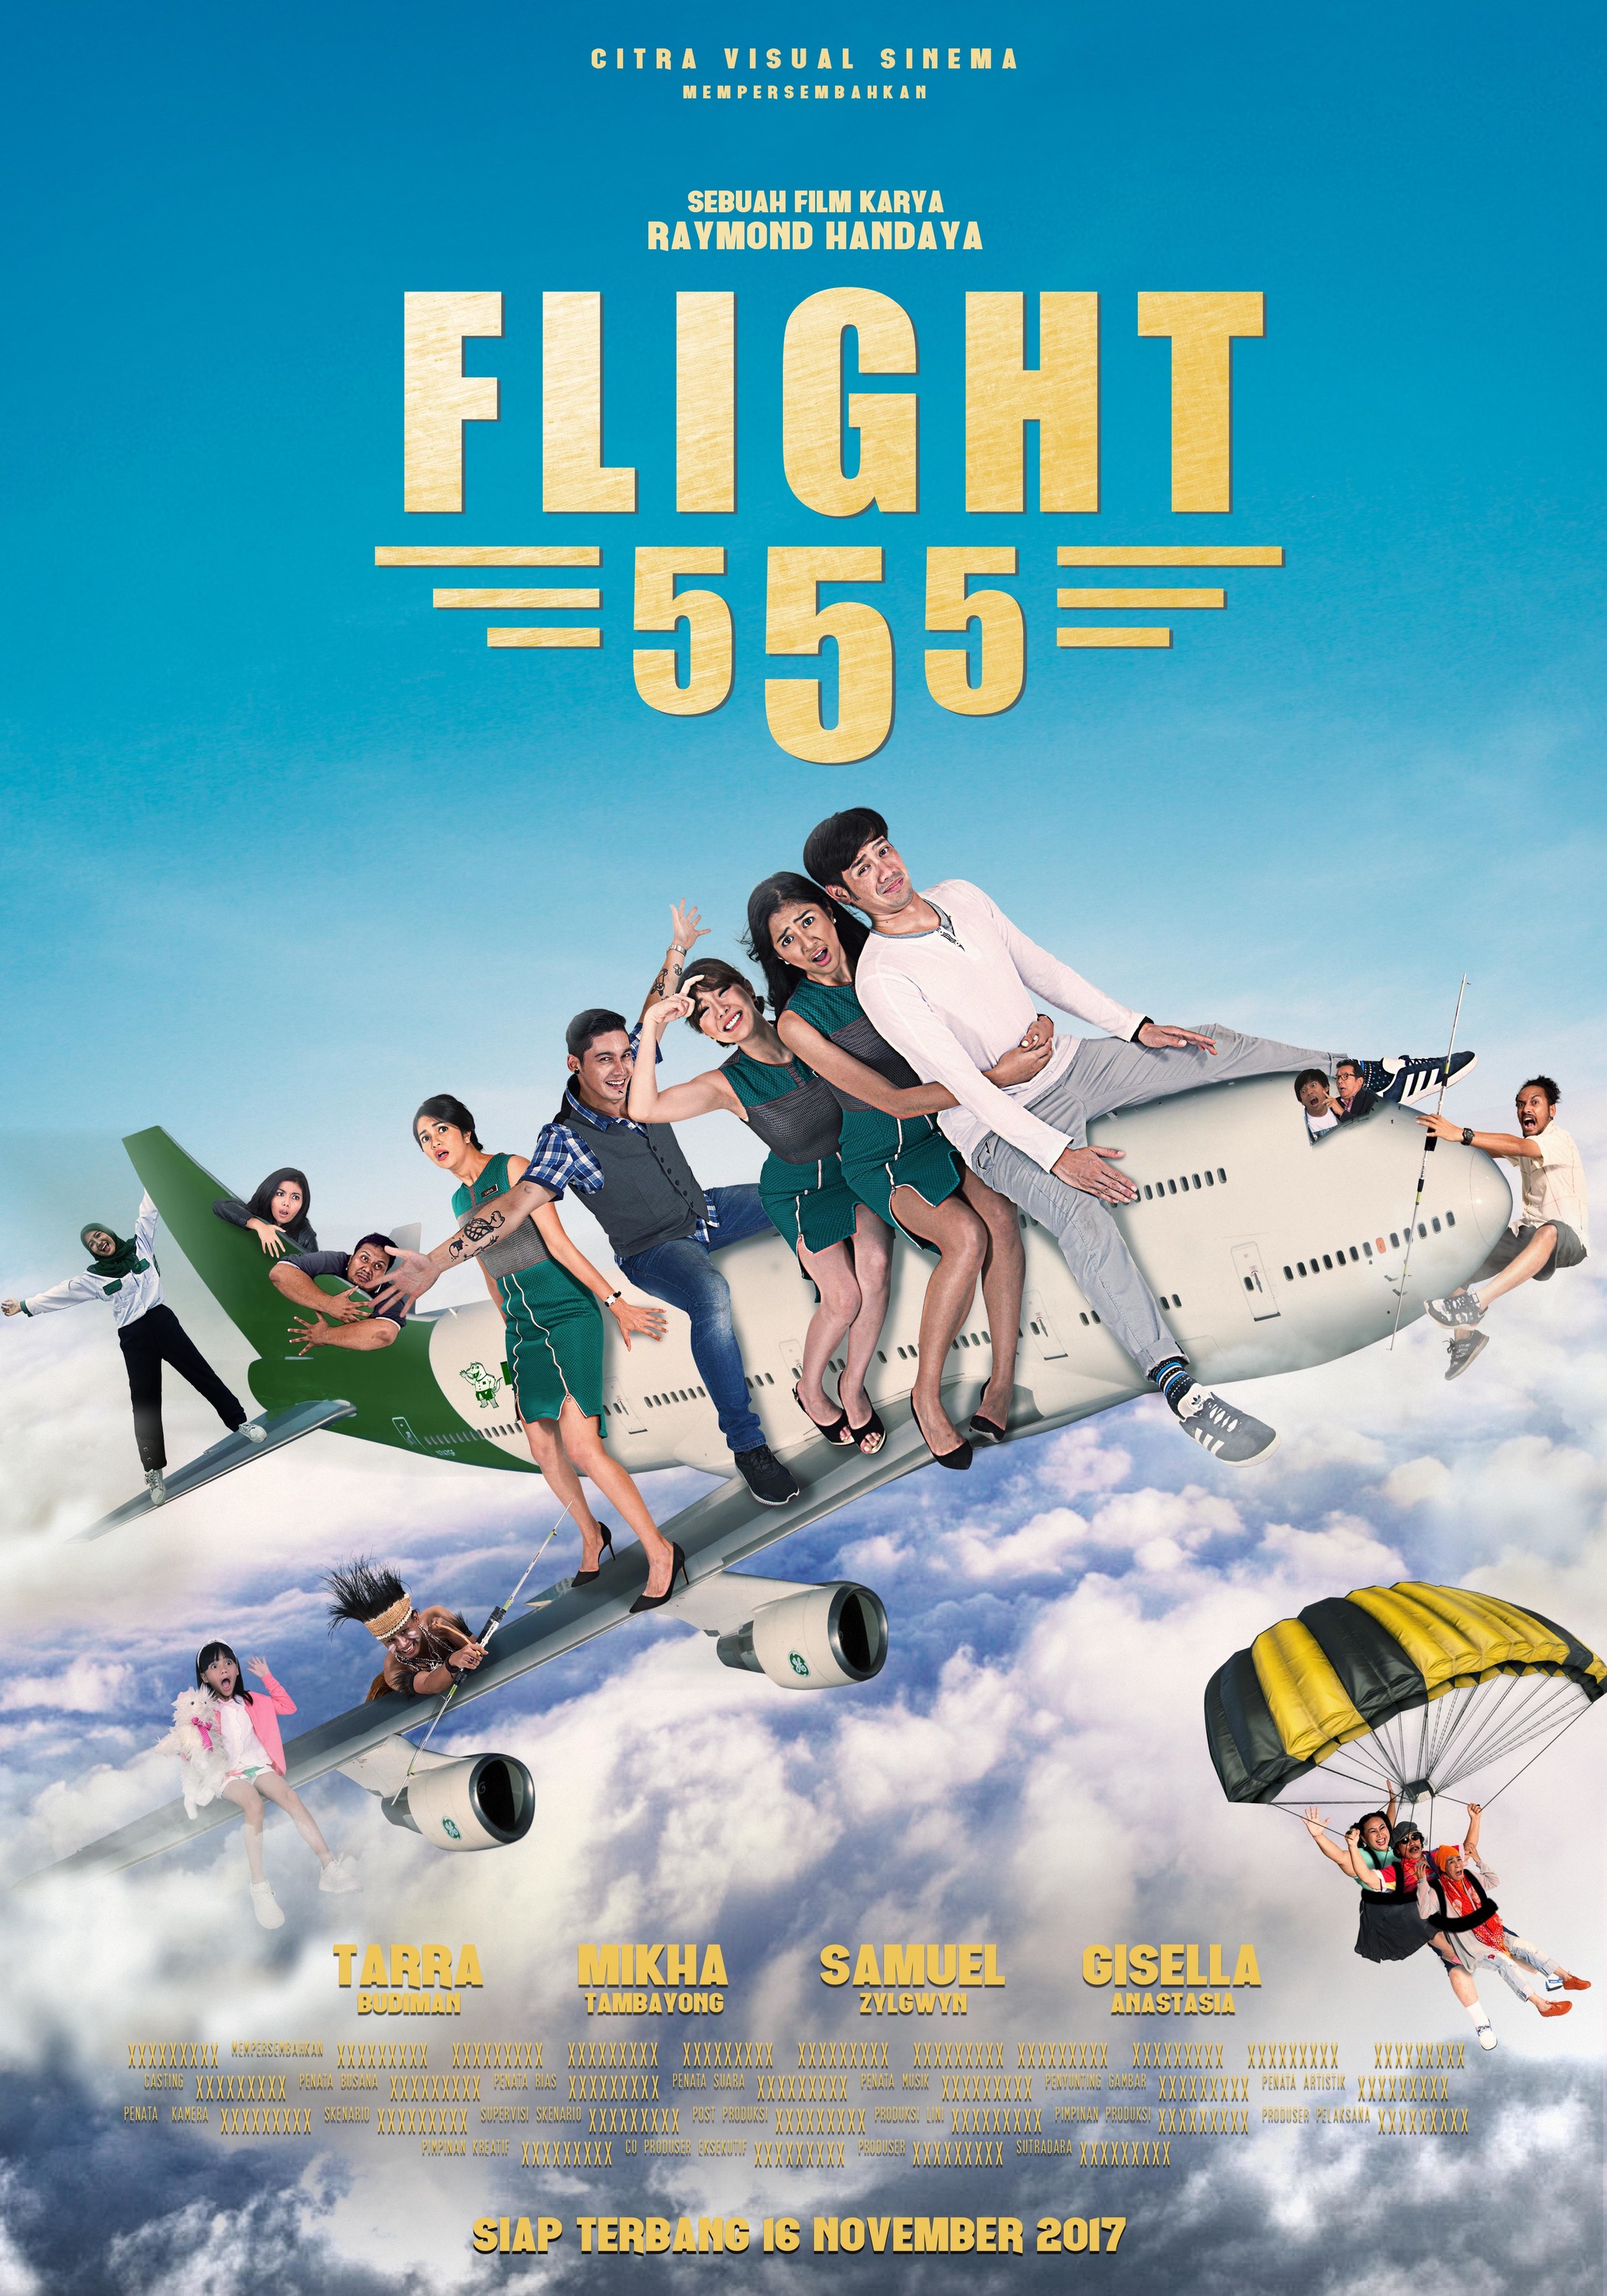 Mega Sized Movie Poster Image for Flight 555 (#2 of 2)